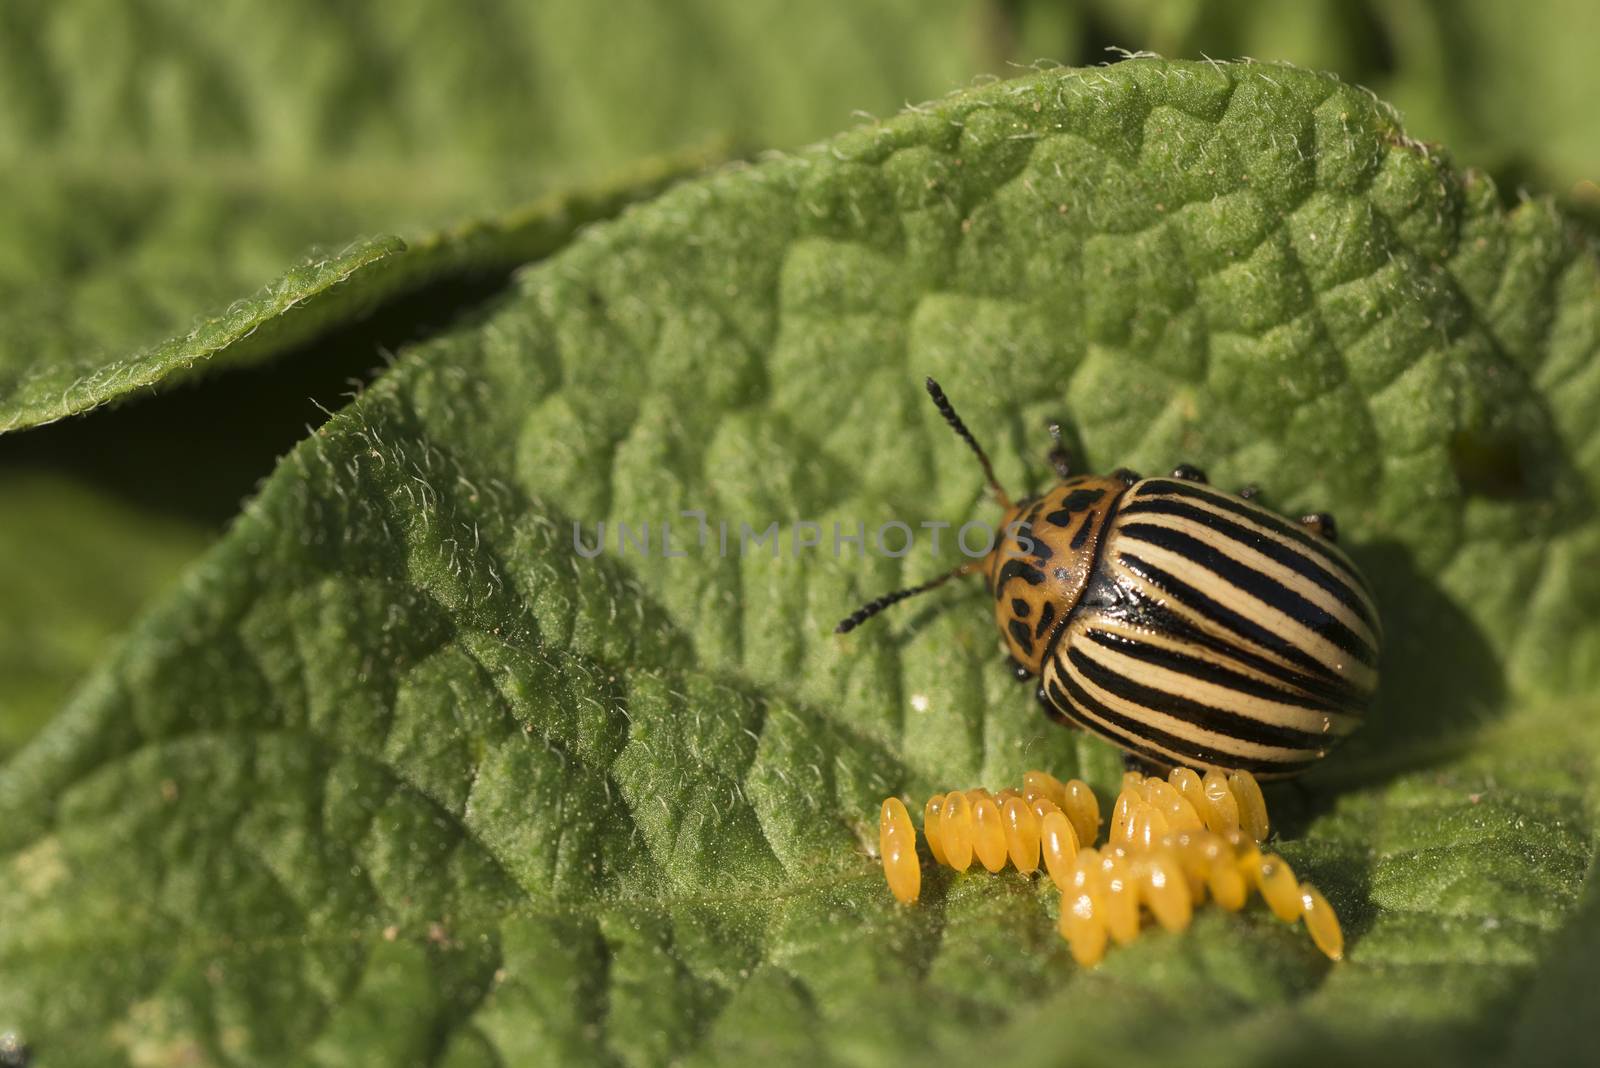 Eggs and Colorado potato beetle eats potato leaves, Leptinotarsa by jalonsohu@gmail.com